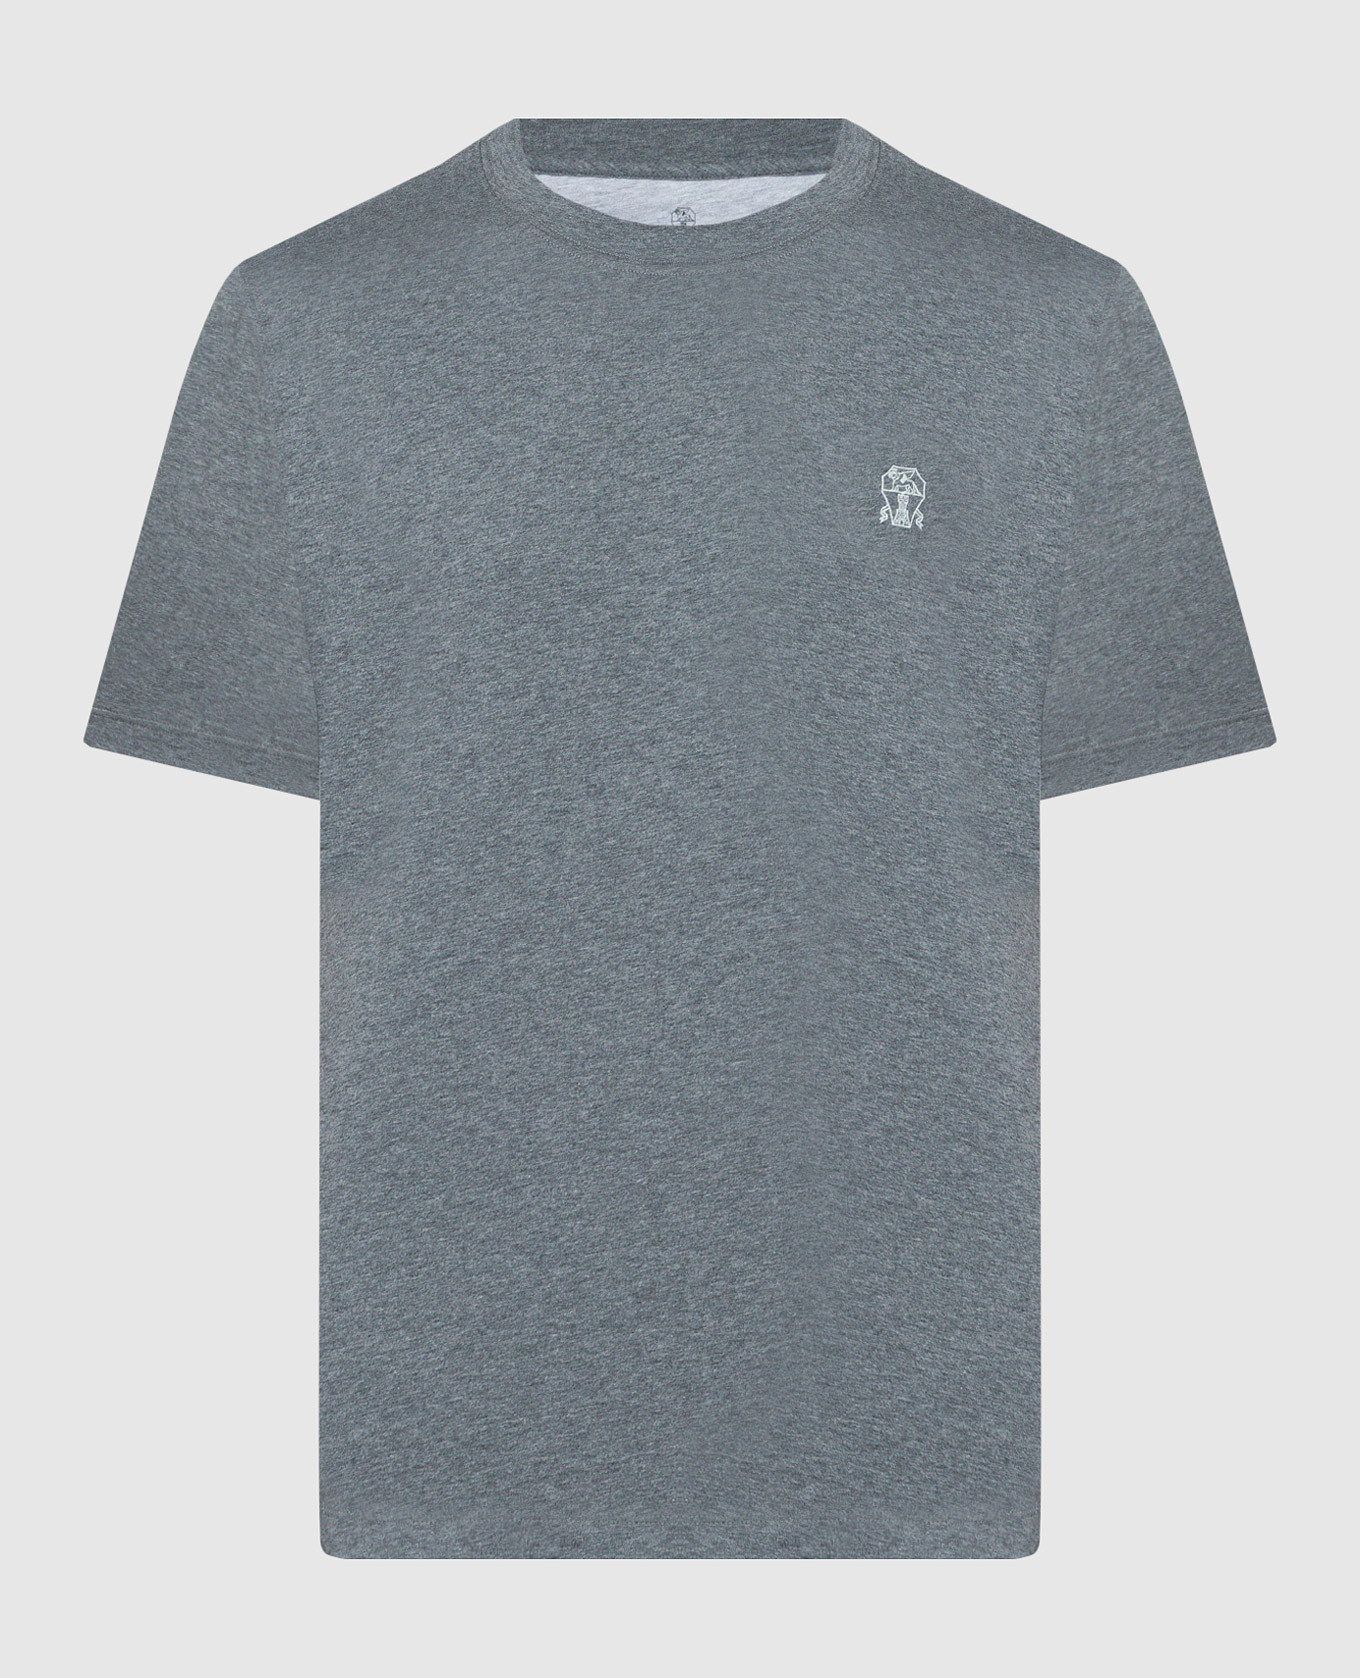 Gray t-shirt with logo emblem